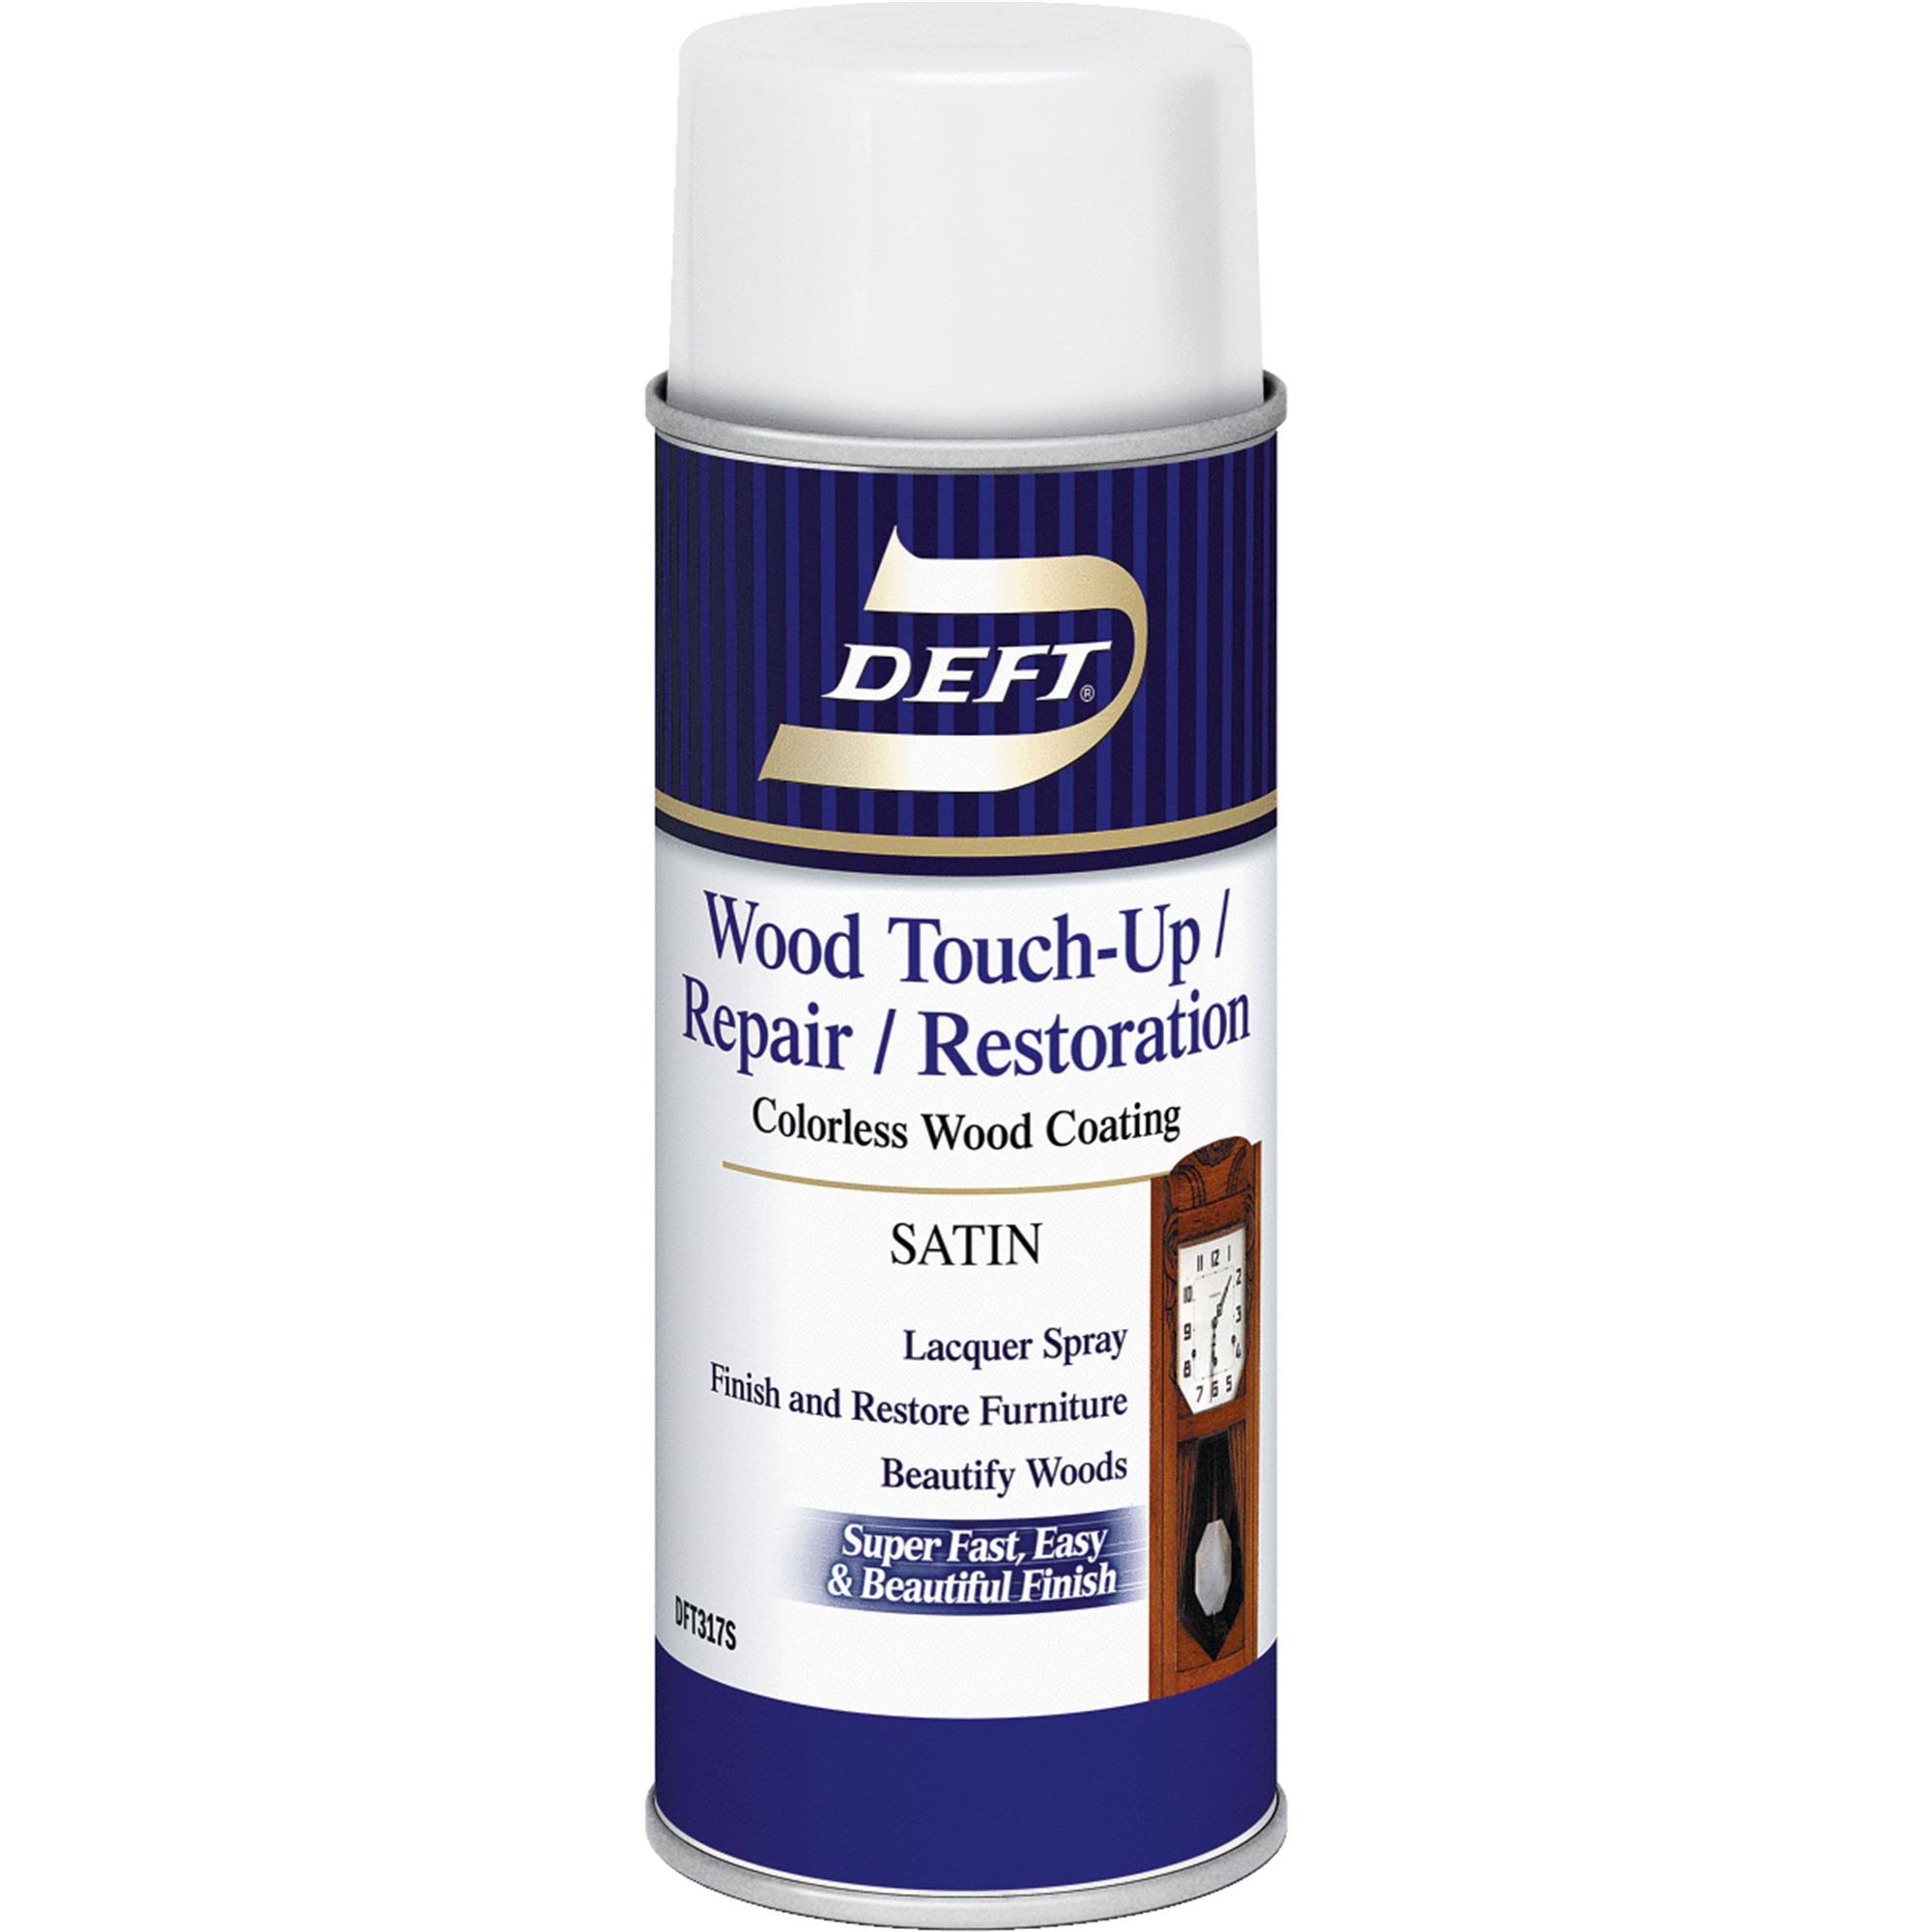 Deft VOC Compliant Clear Wood Finish Interior Spray Lacquer - 12.25oz